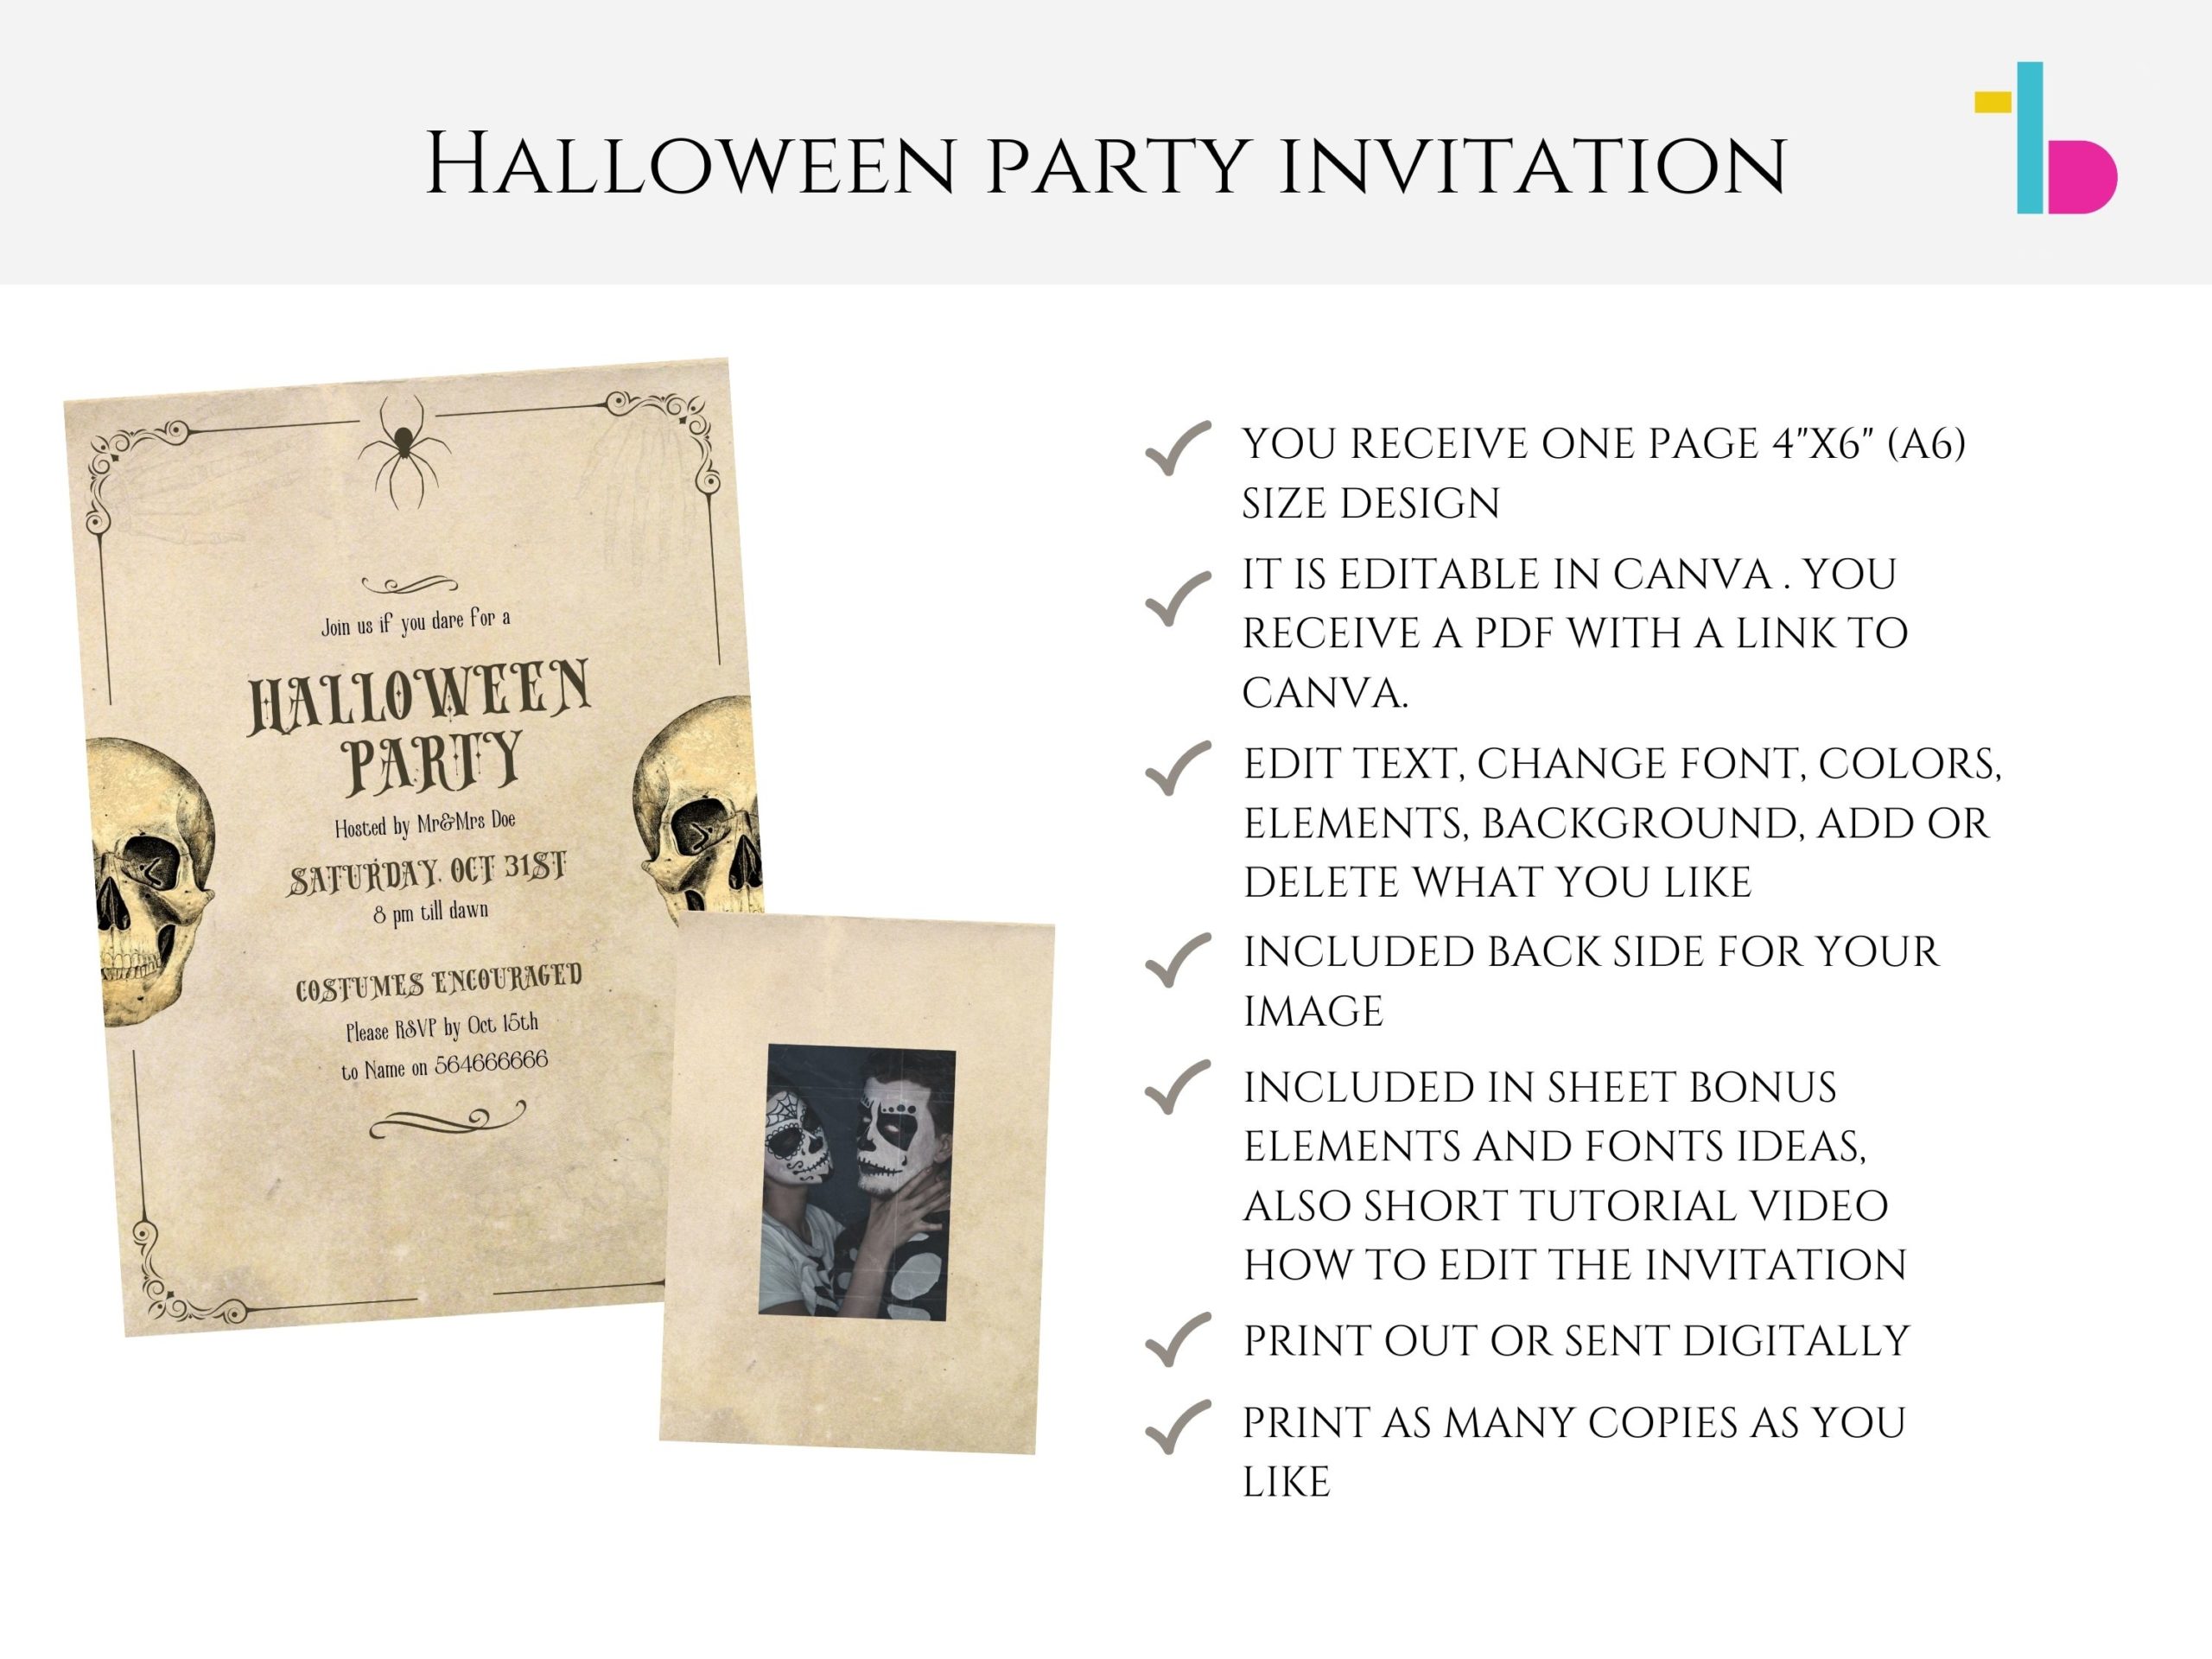 Victorian Gothic Halloween party invite